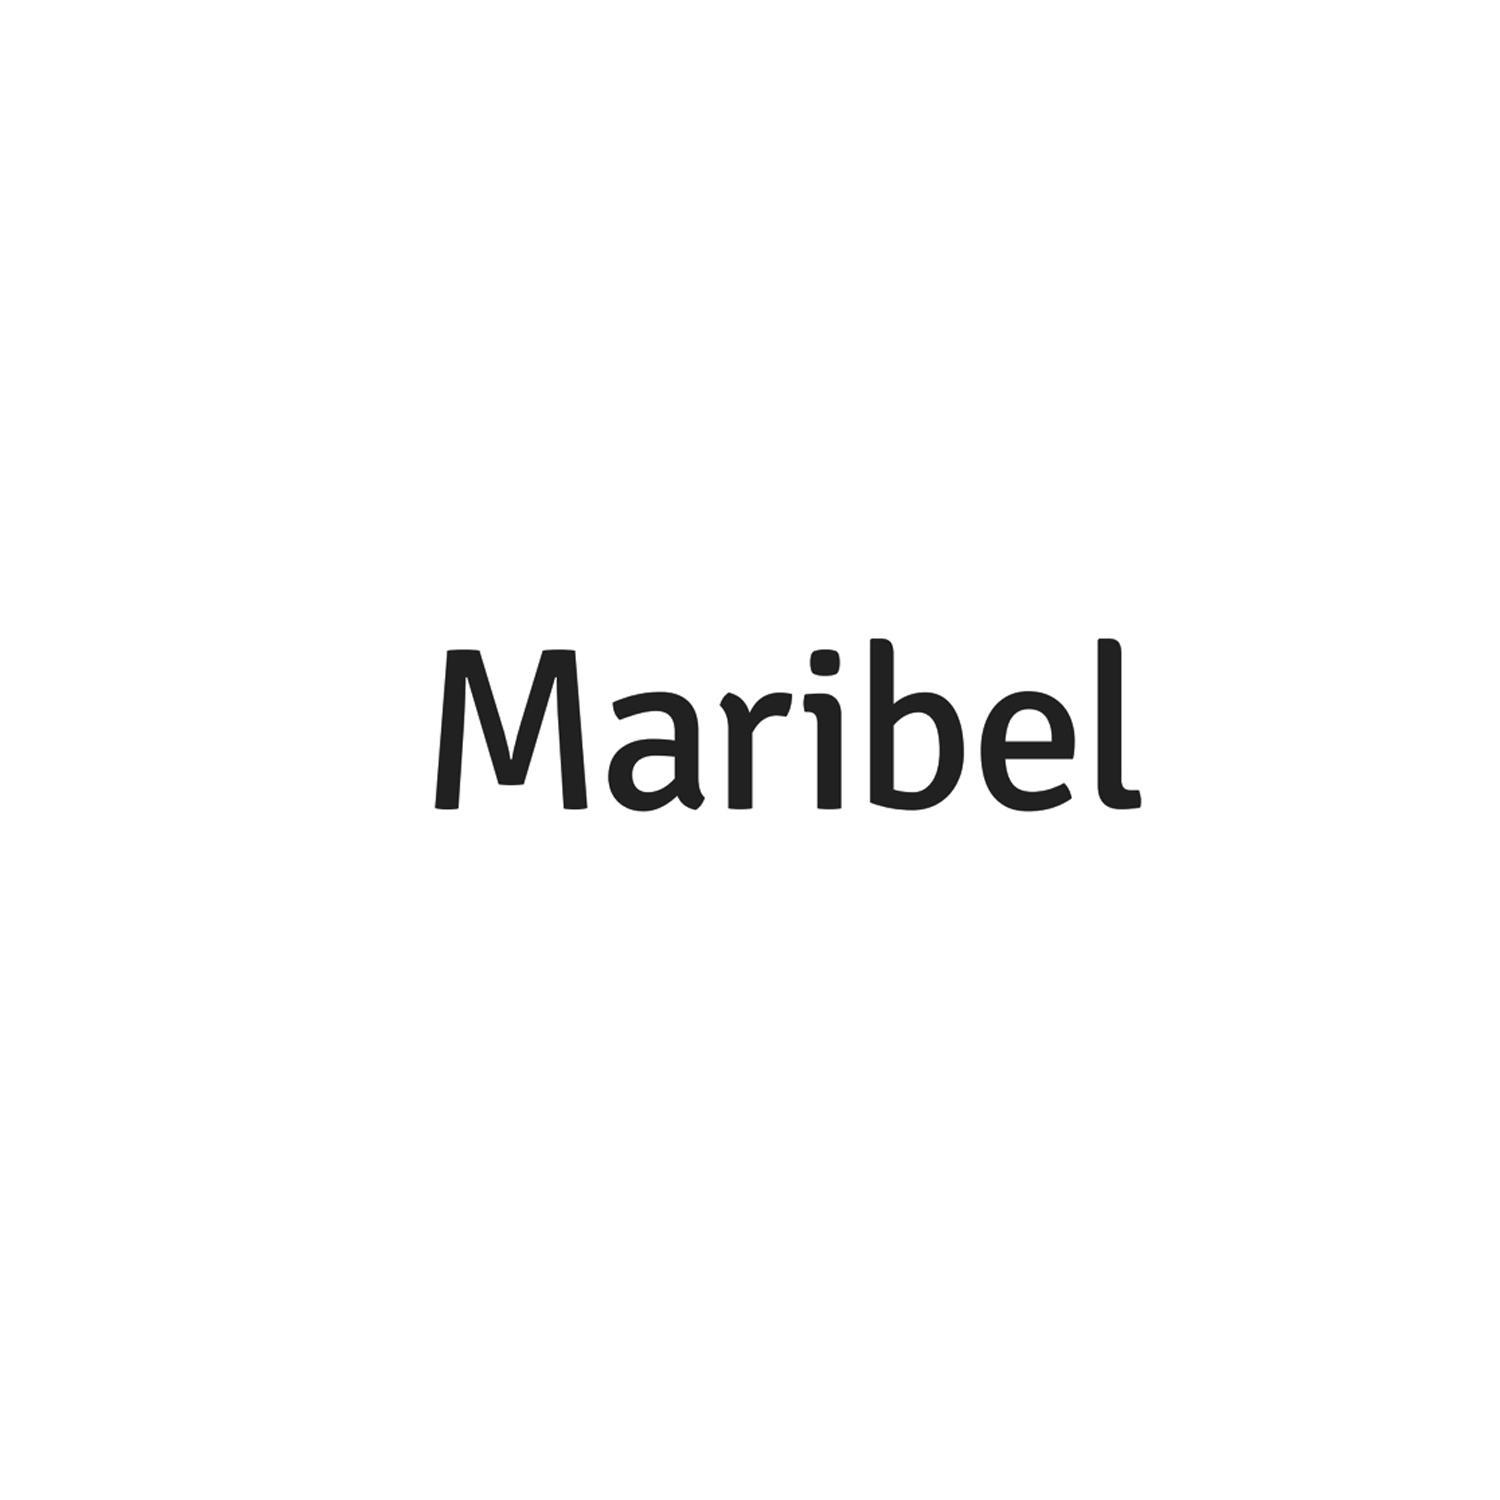 MARIBEL